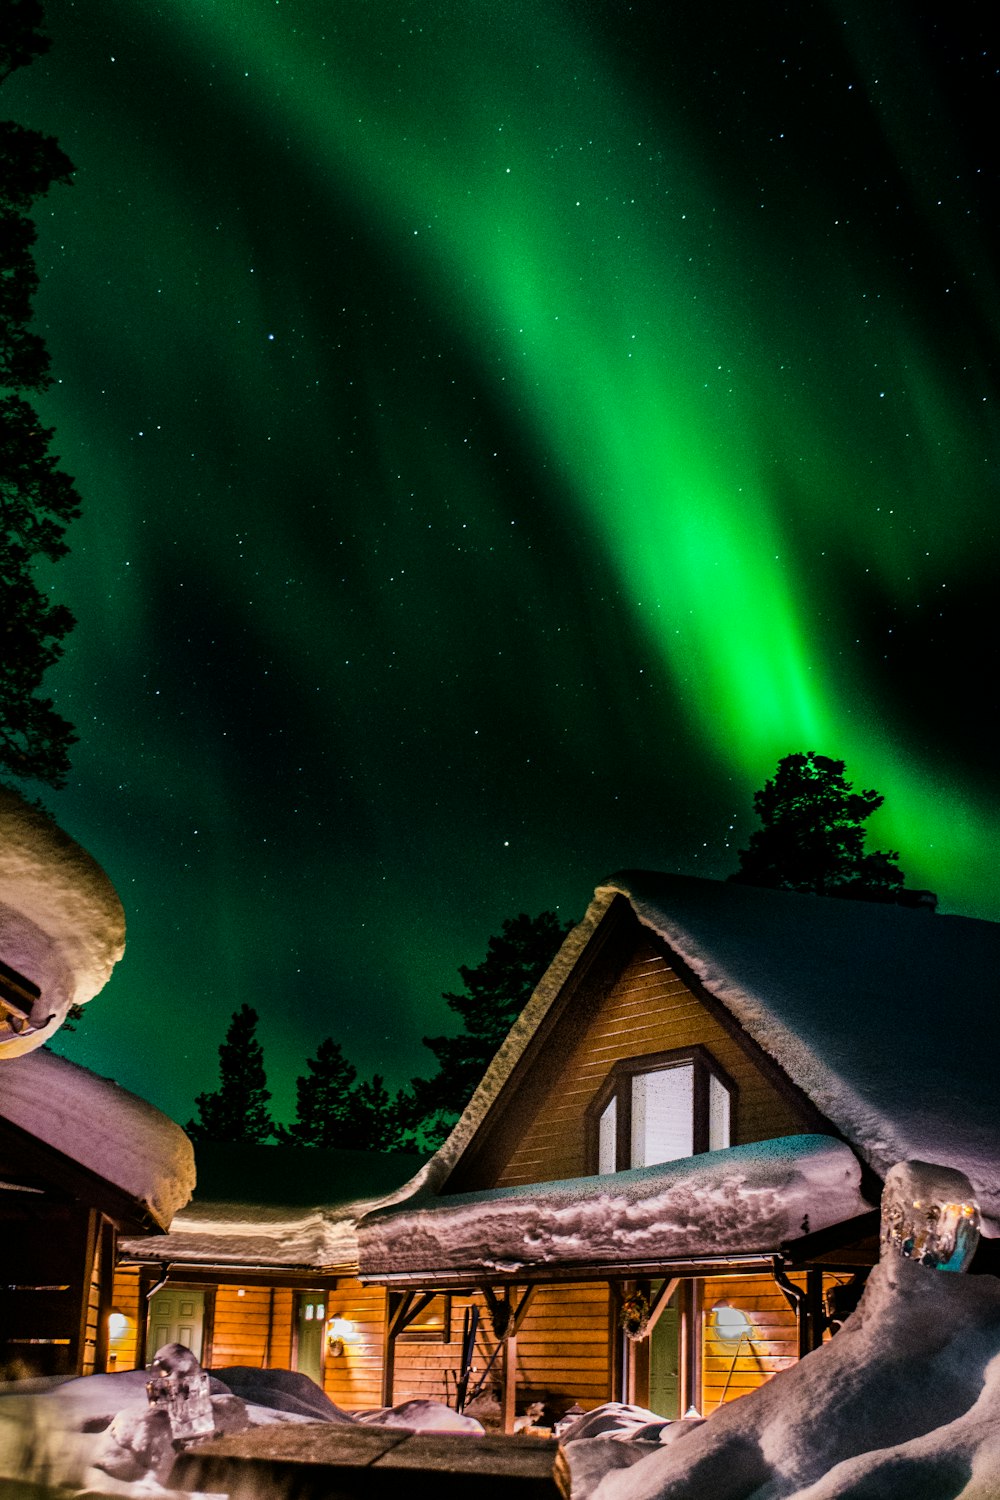 log house and green aurora phenomenon